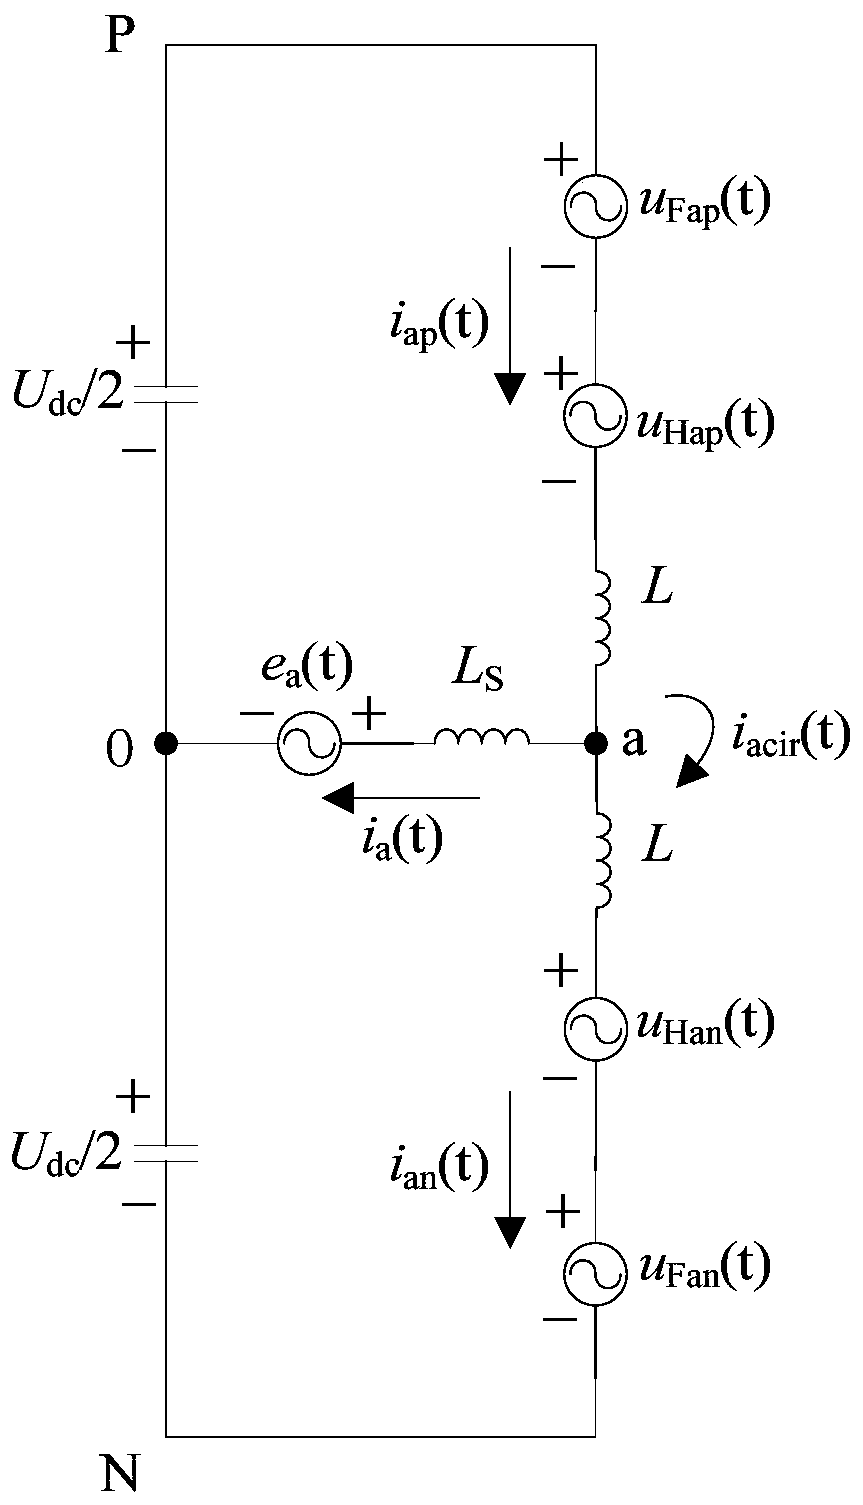 A Capacitor Precharging Method for Modular Multilevel Converter Topology